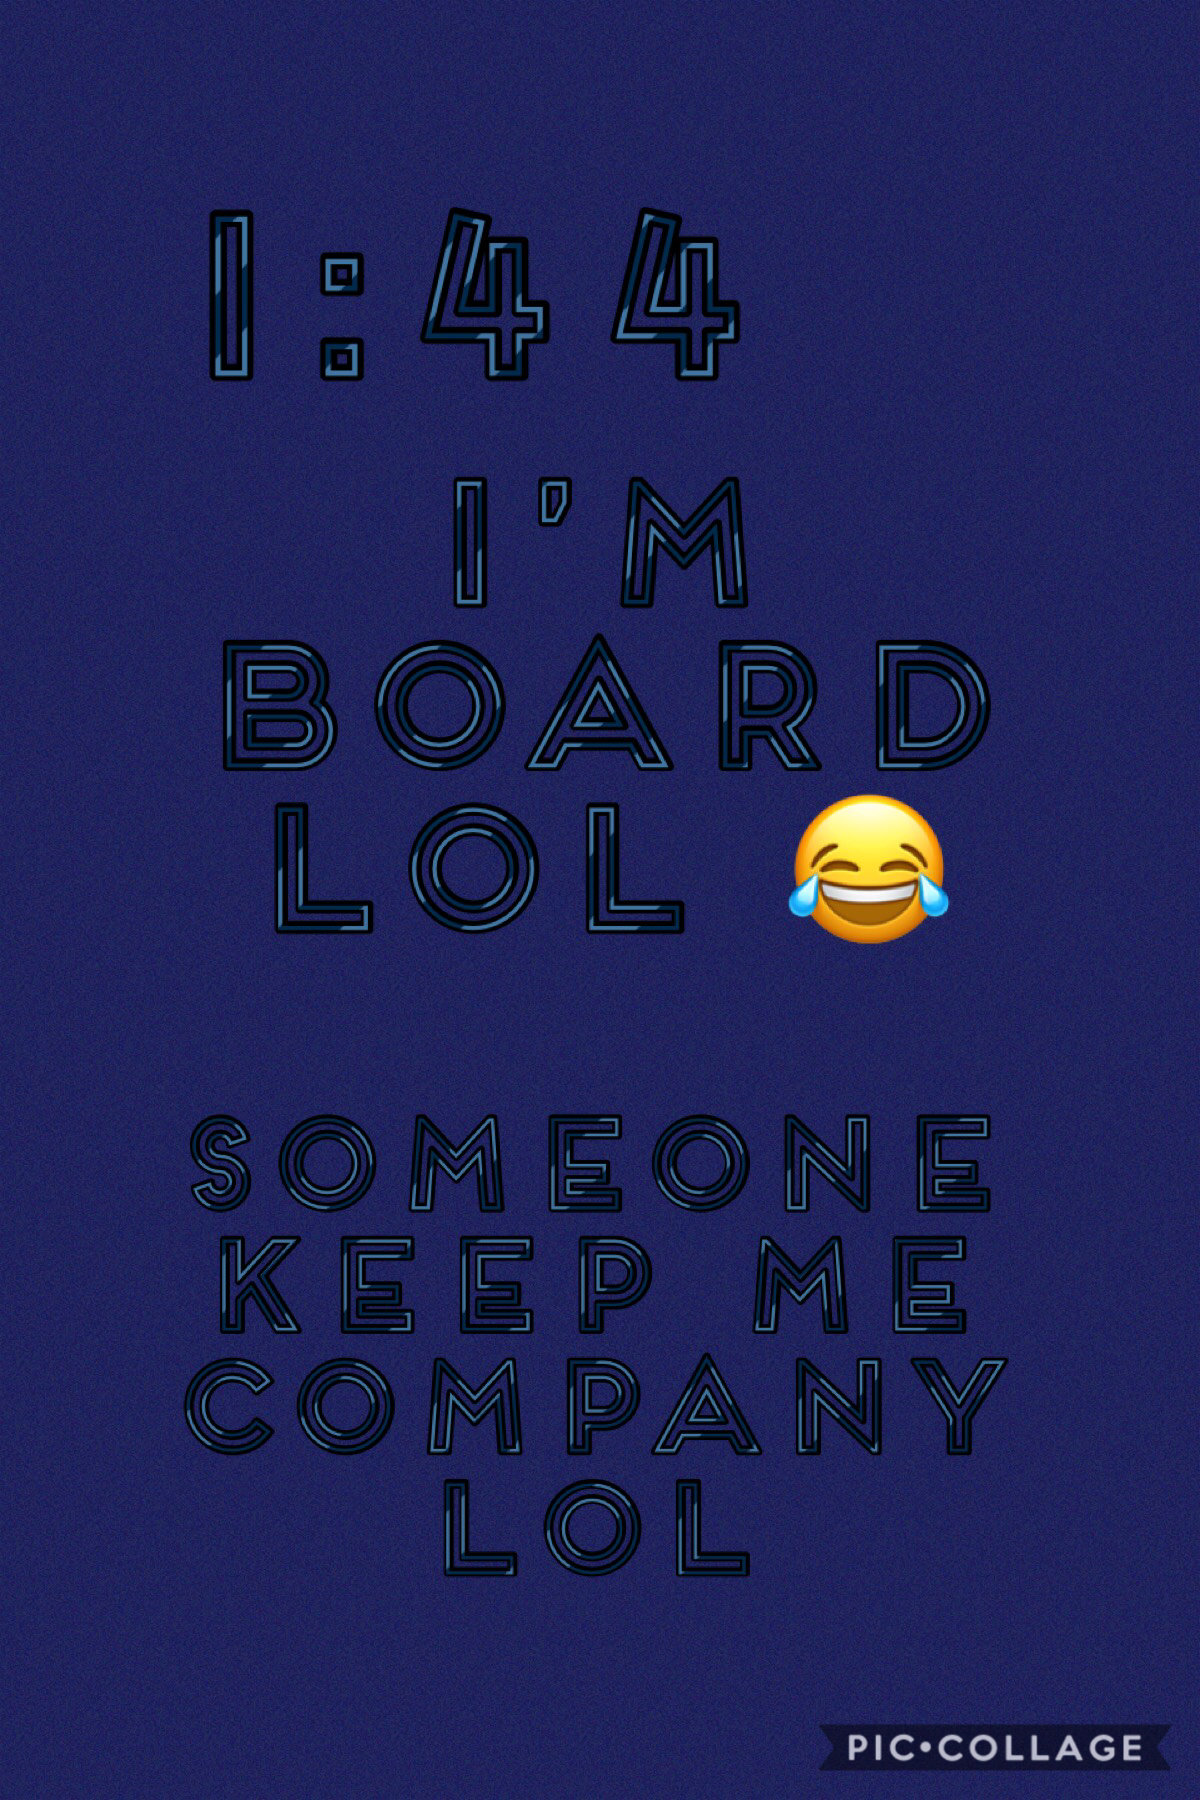 1:44 am I’m board 
